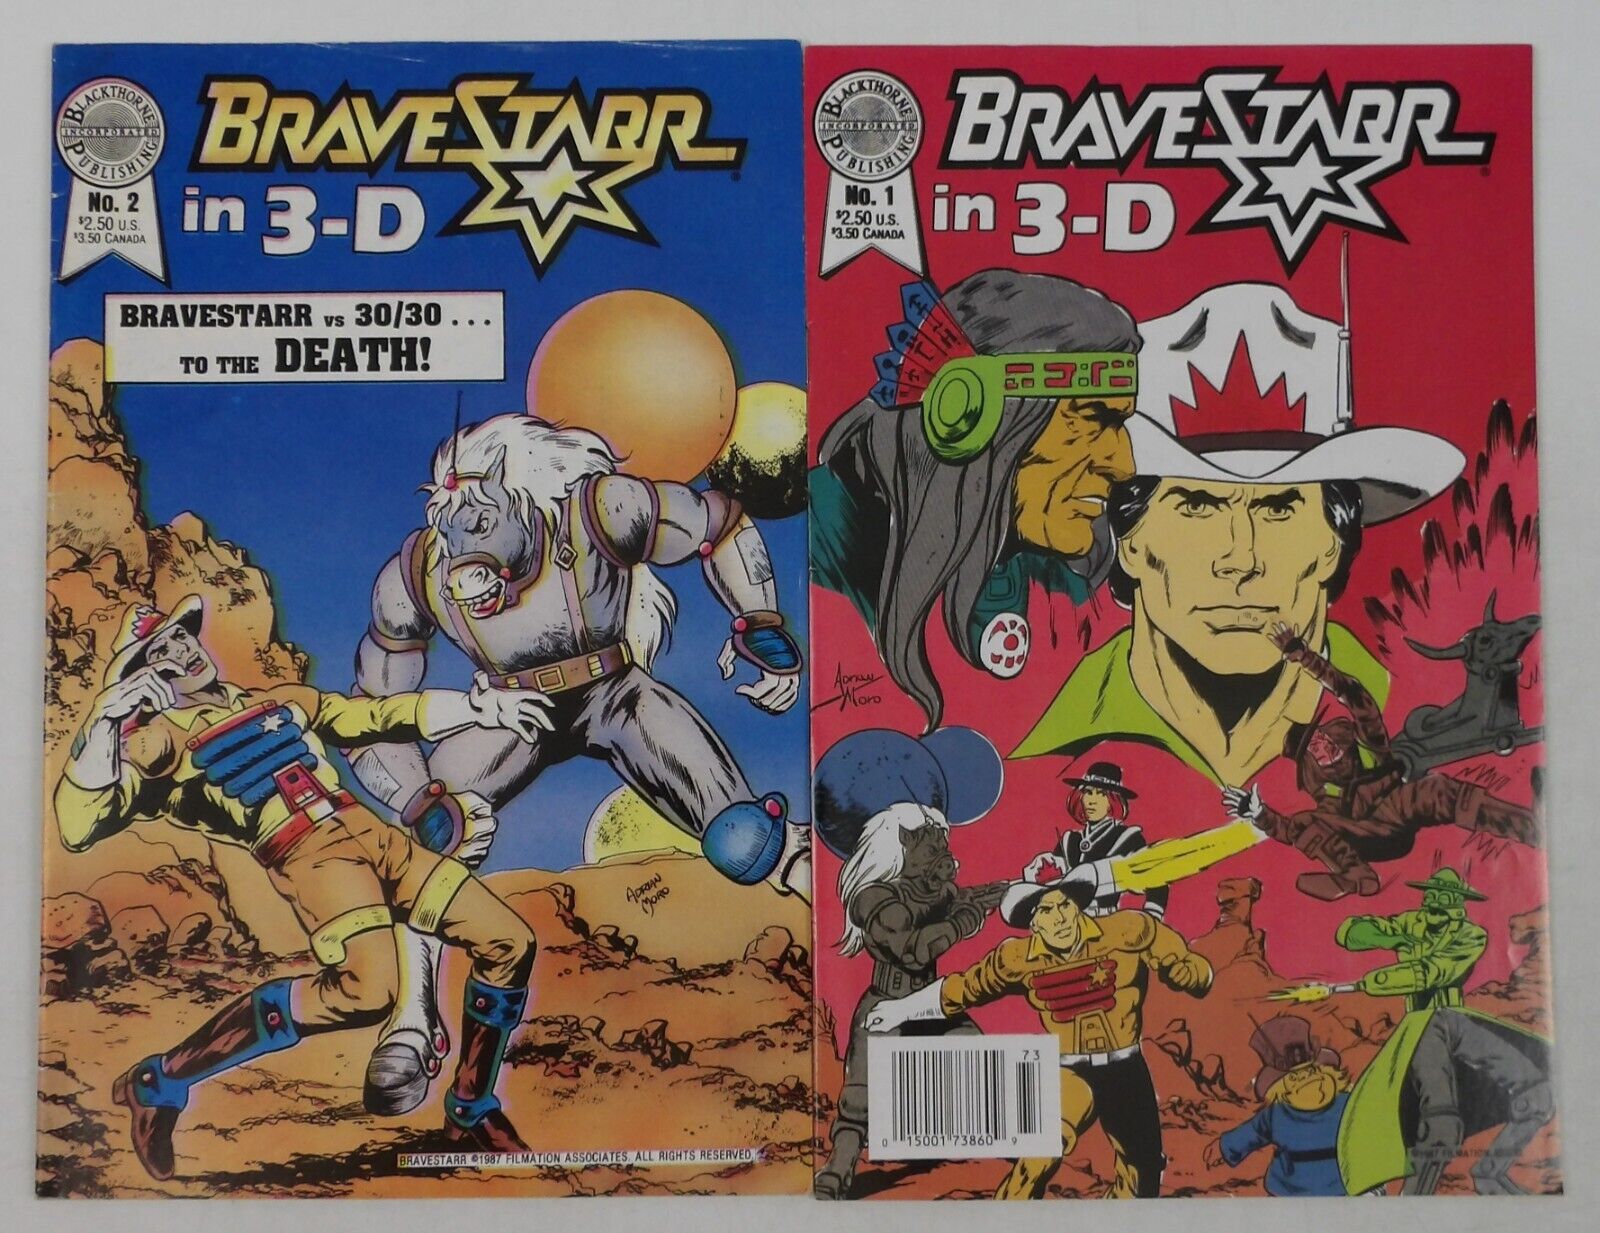 BraveStarr in 3-D #1-2 VG FN complete series - Blackthorne #-D #27 & #40